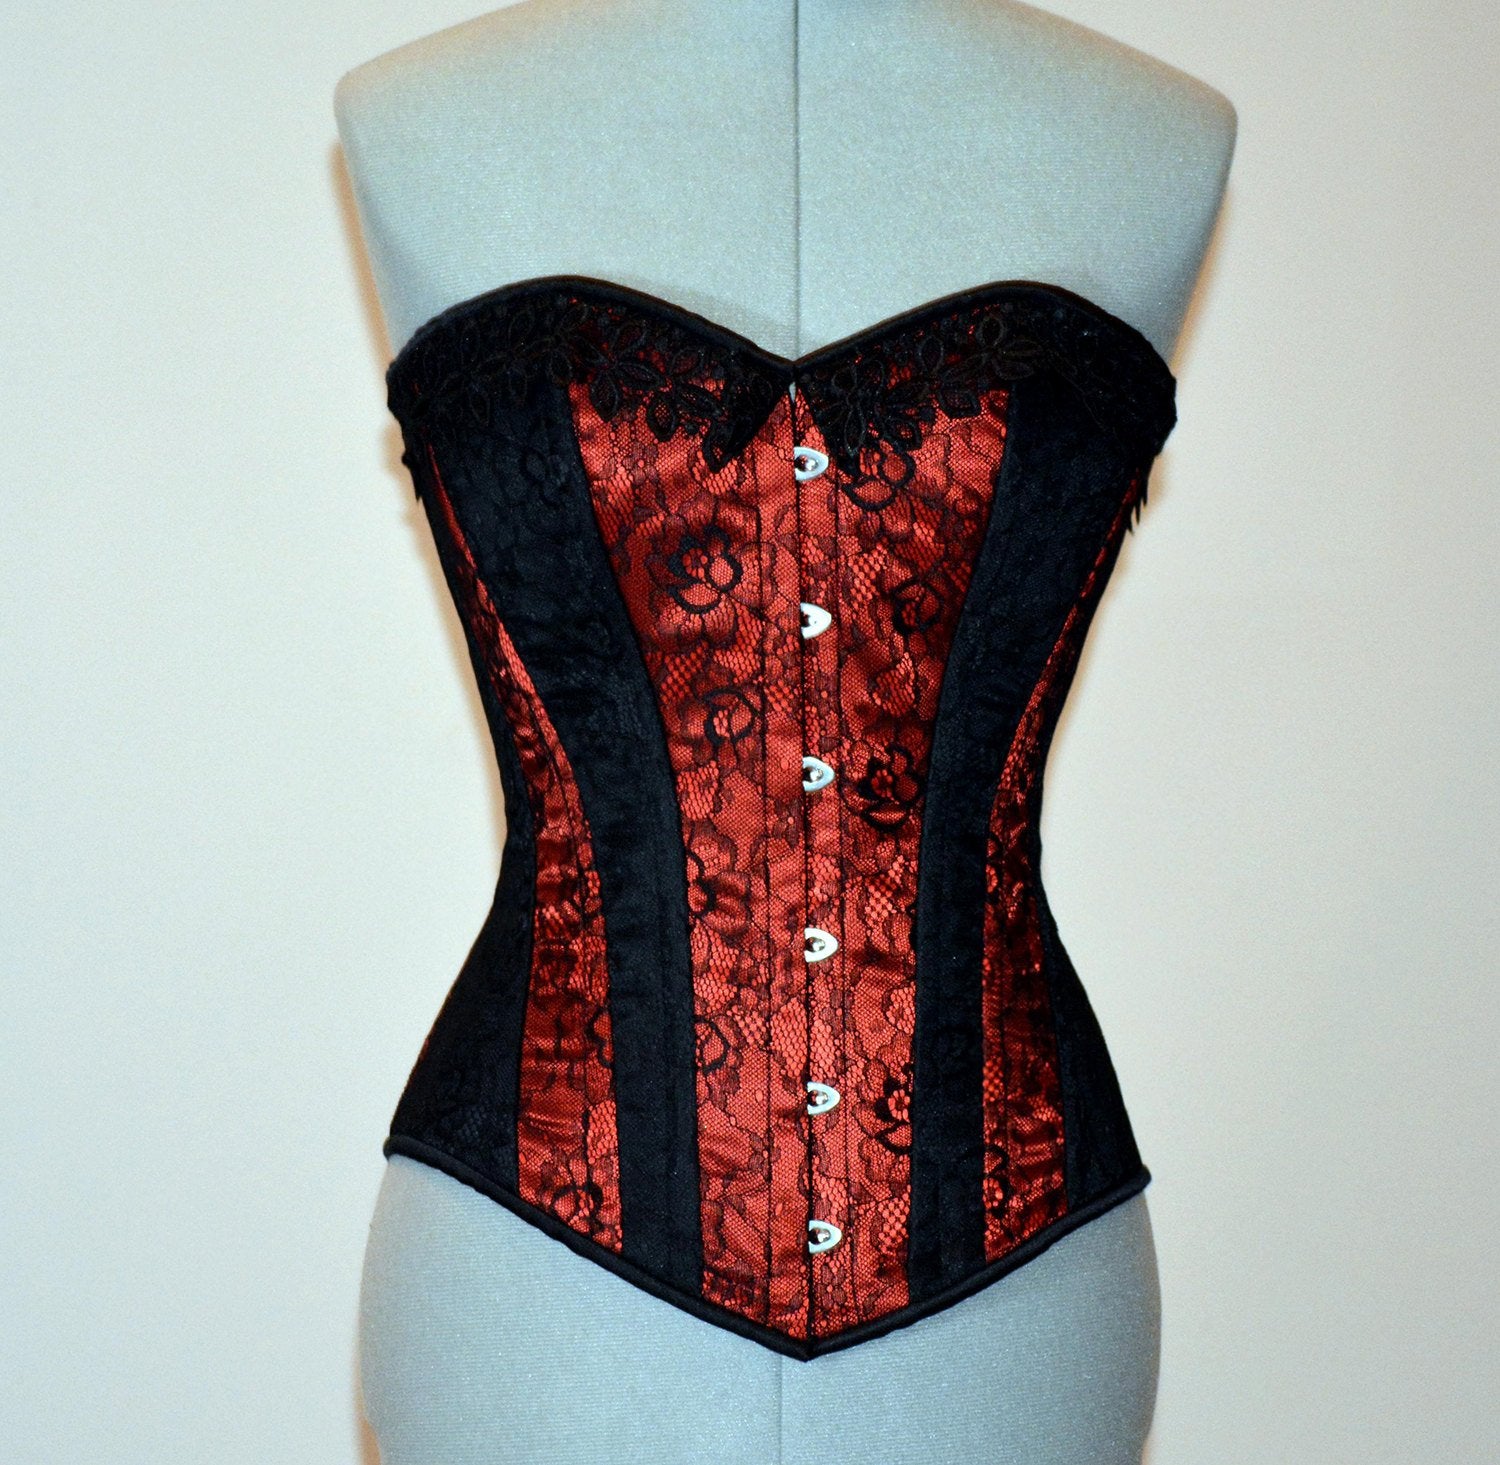 Authentic steel-boned underbust corsets – Corsettery Authentic